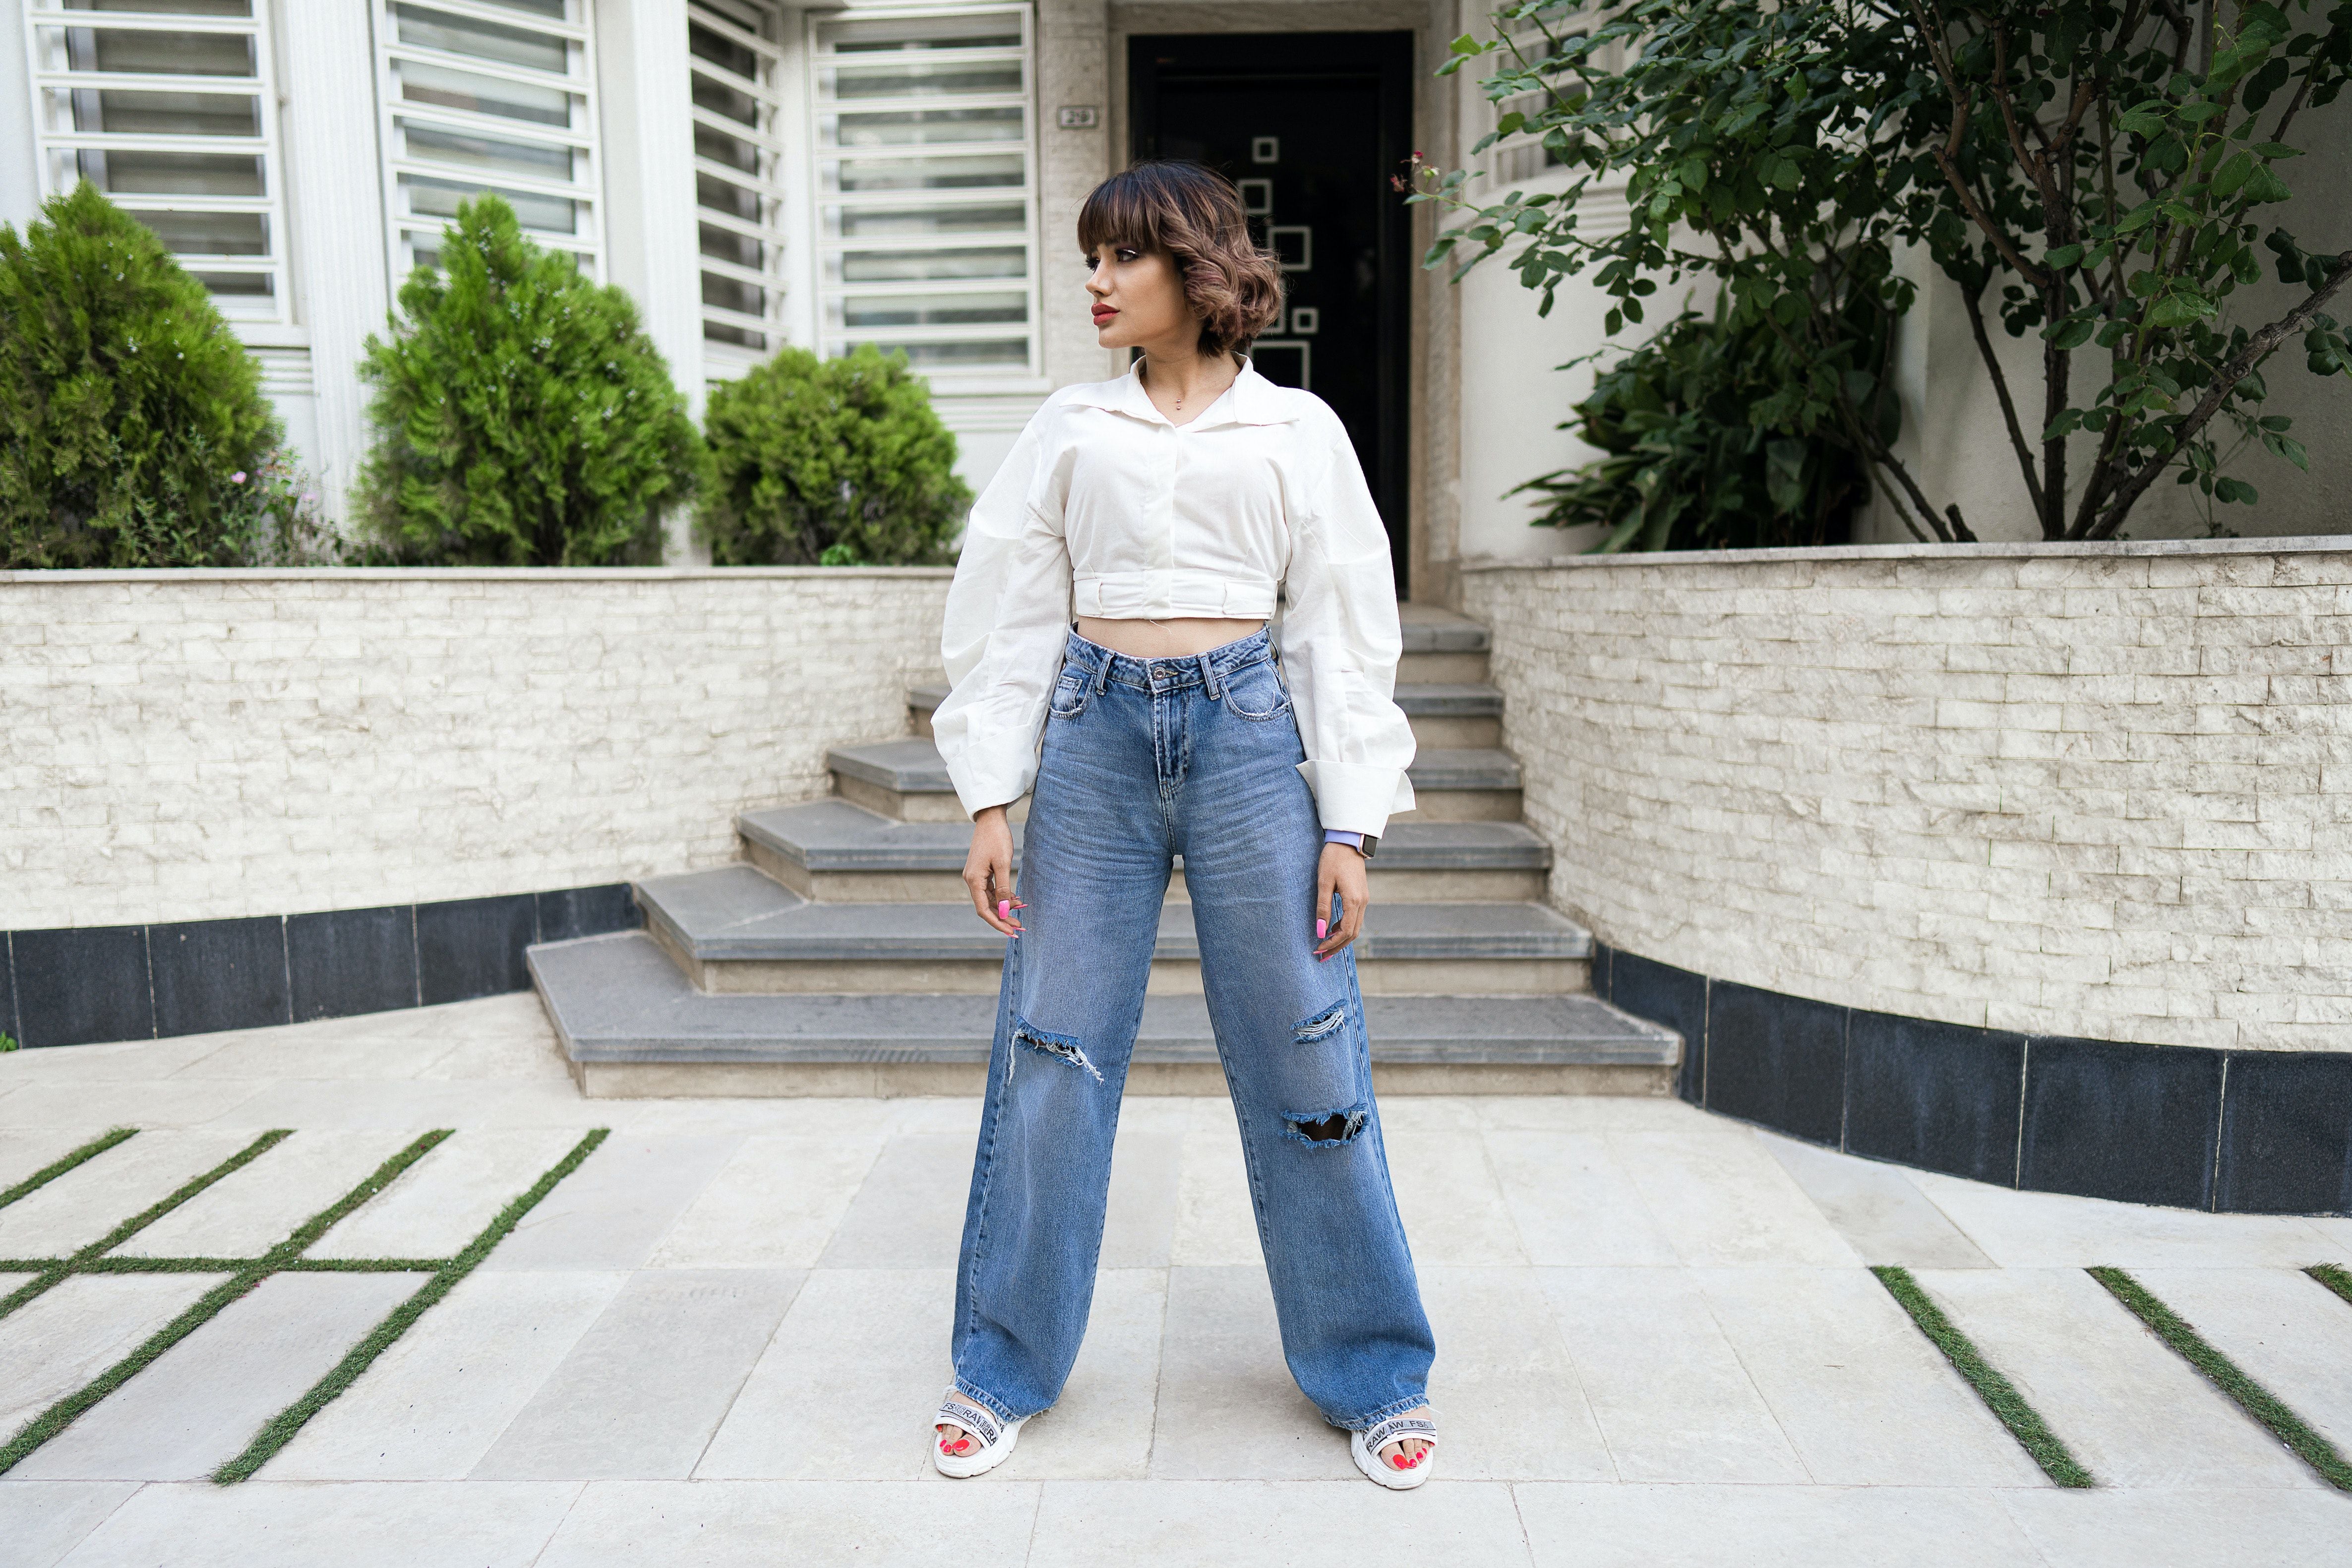 Jeans en tendencia de Primavera-Verano 2023 para lucir con blusas